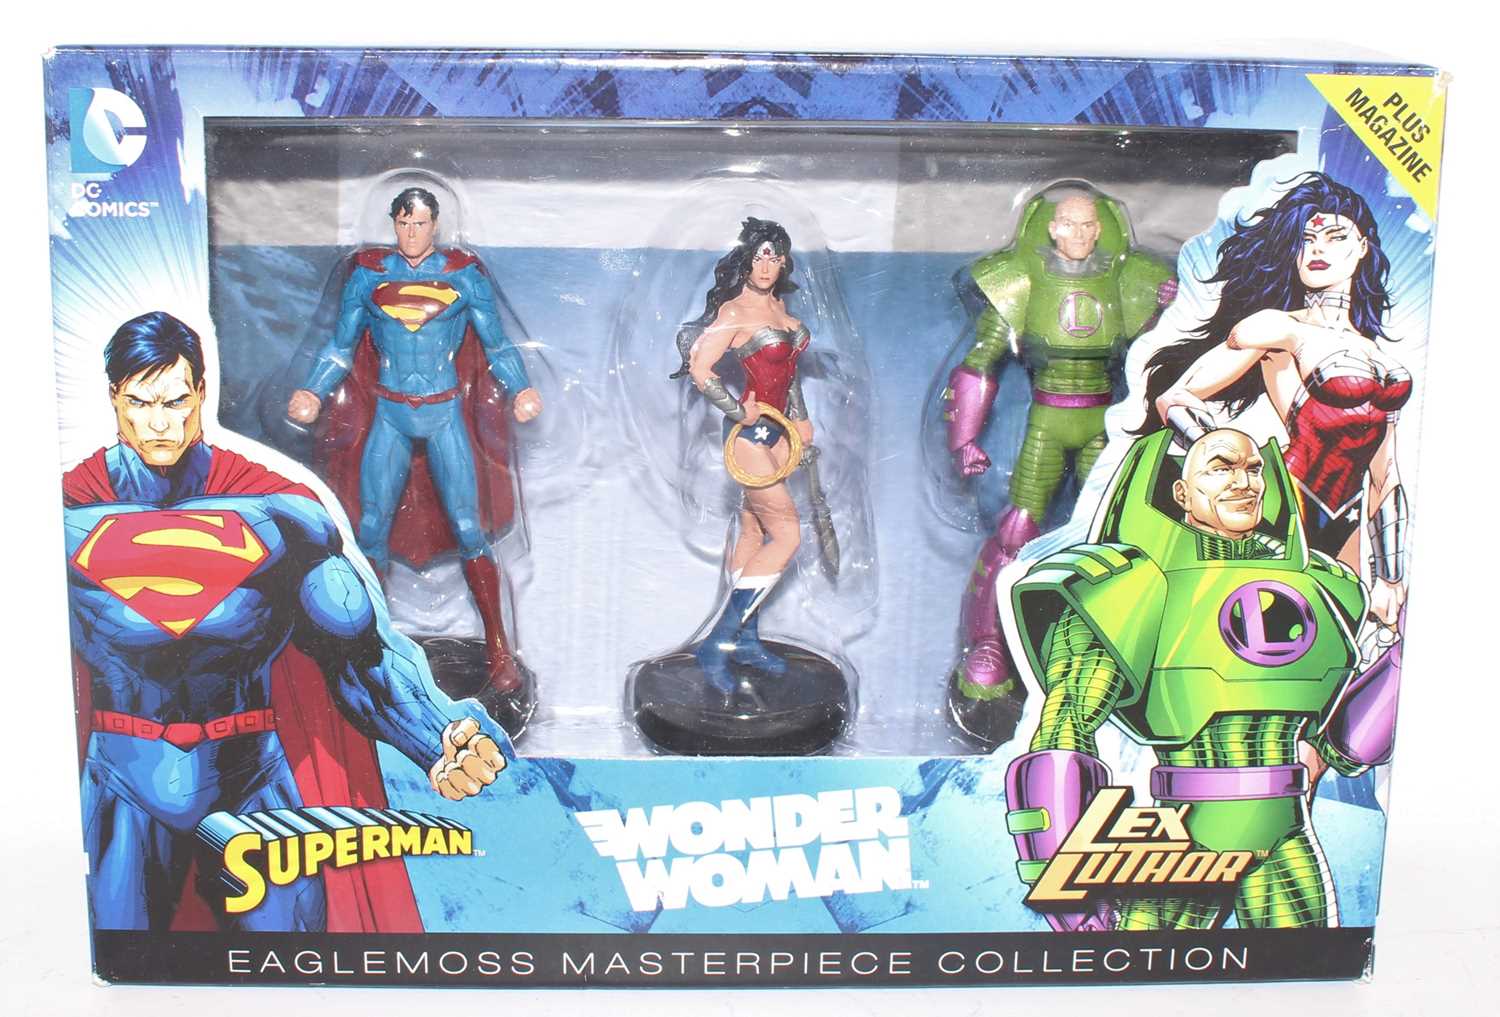 An Eagle Moss Masterpiece collection, 3 piece DC comics gift set containing Superman, Wonderwoman